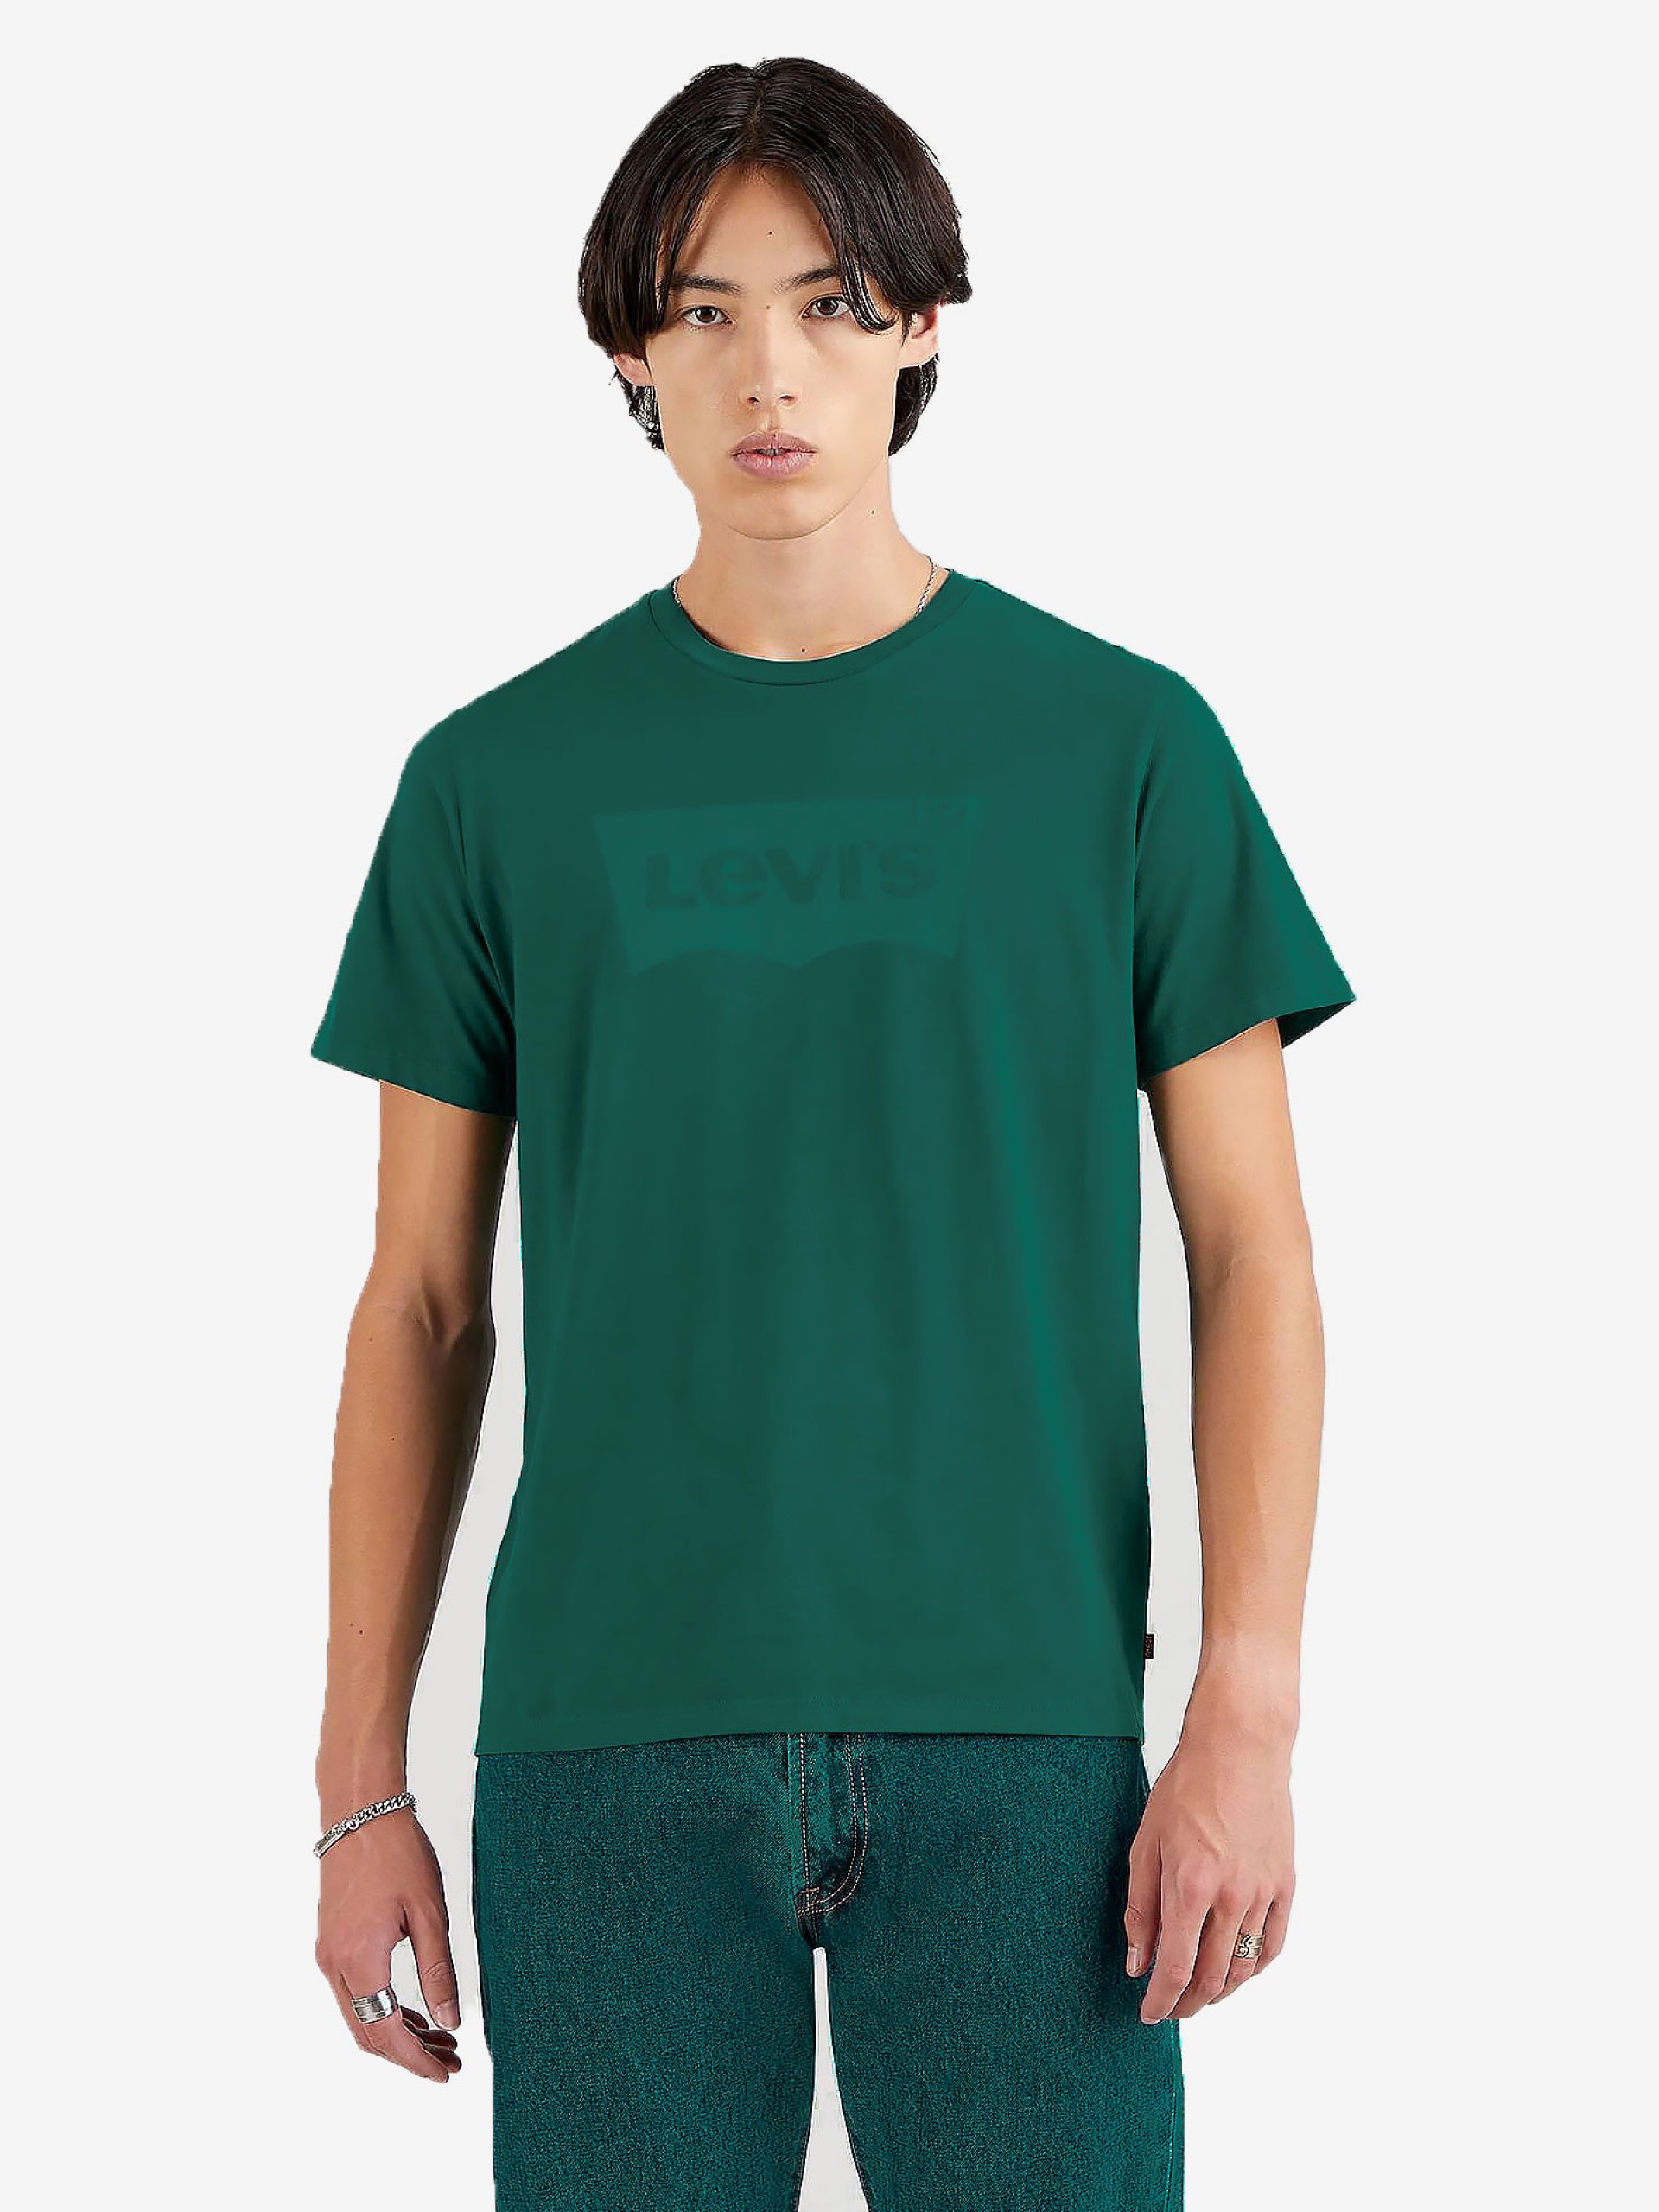 Levis Housemark Graphic T-shirt | BZR